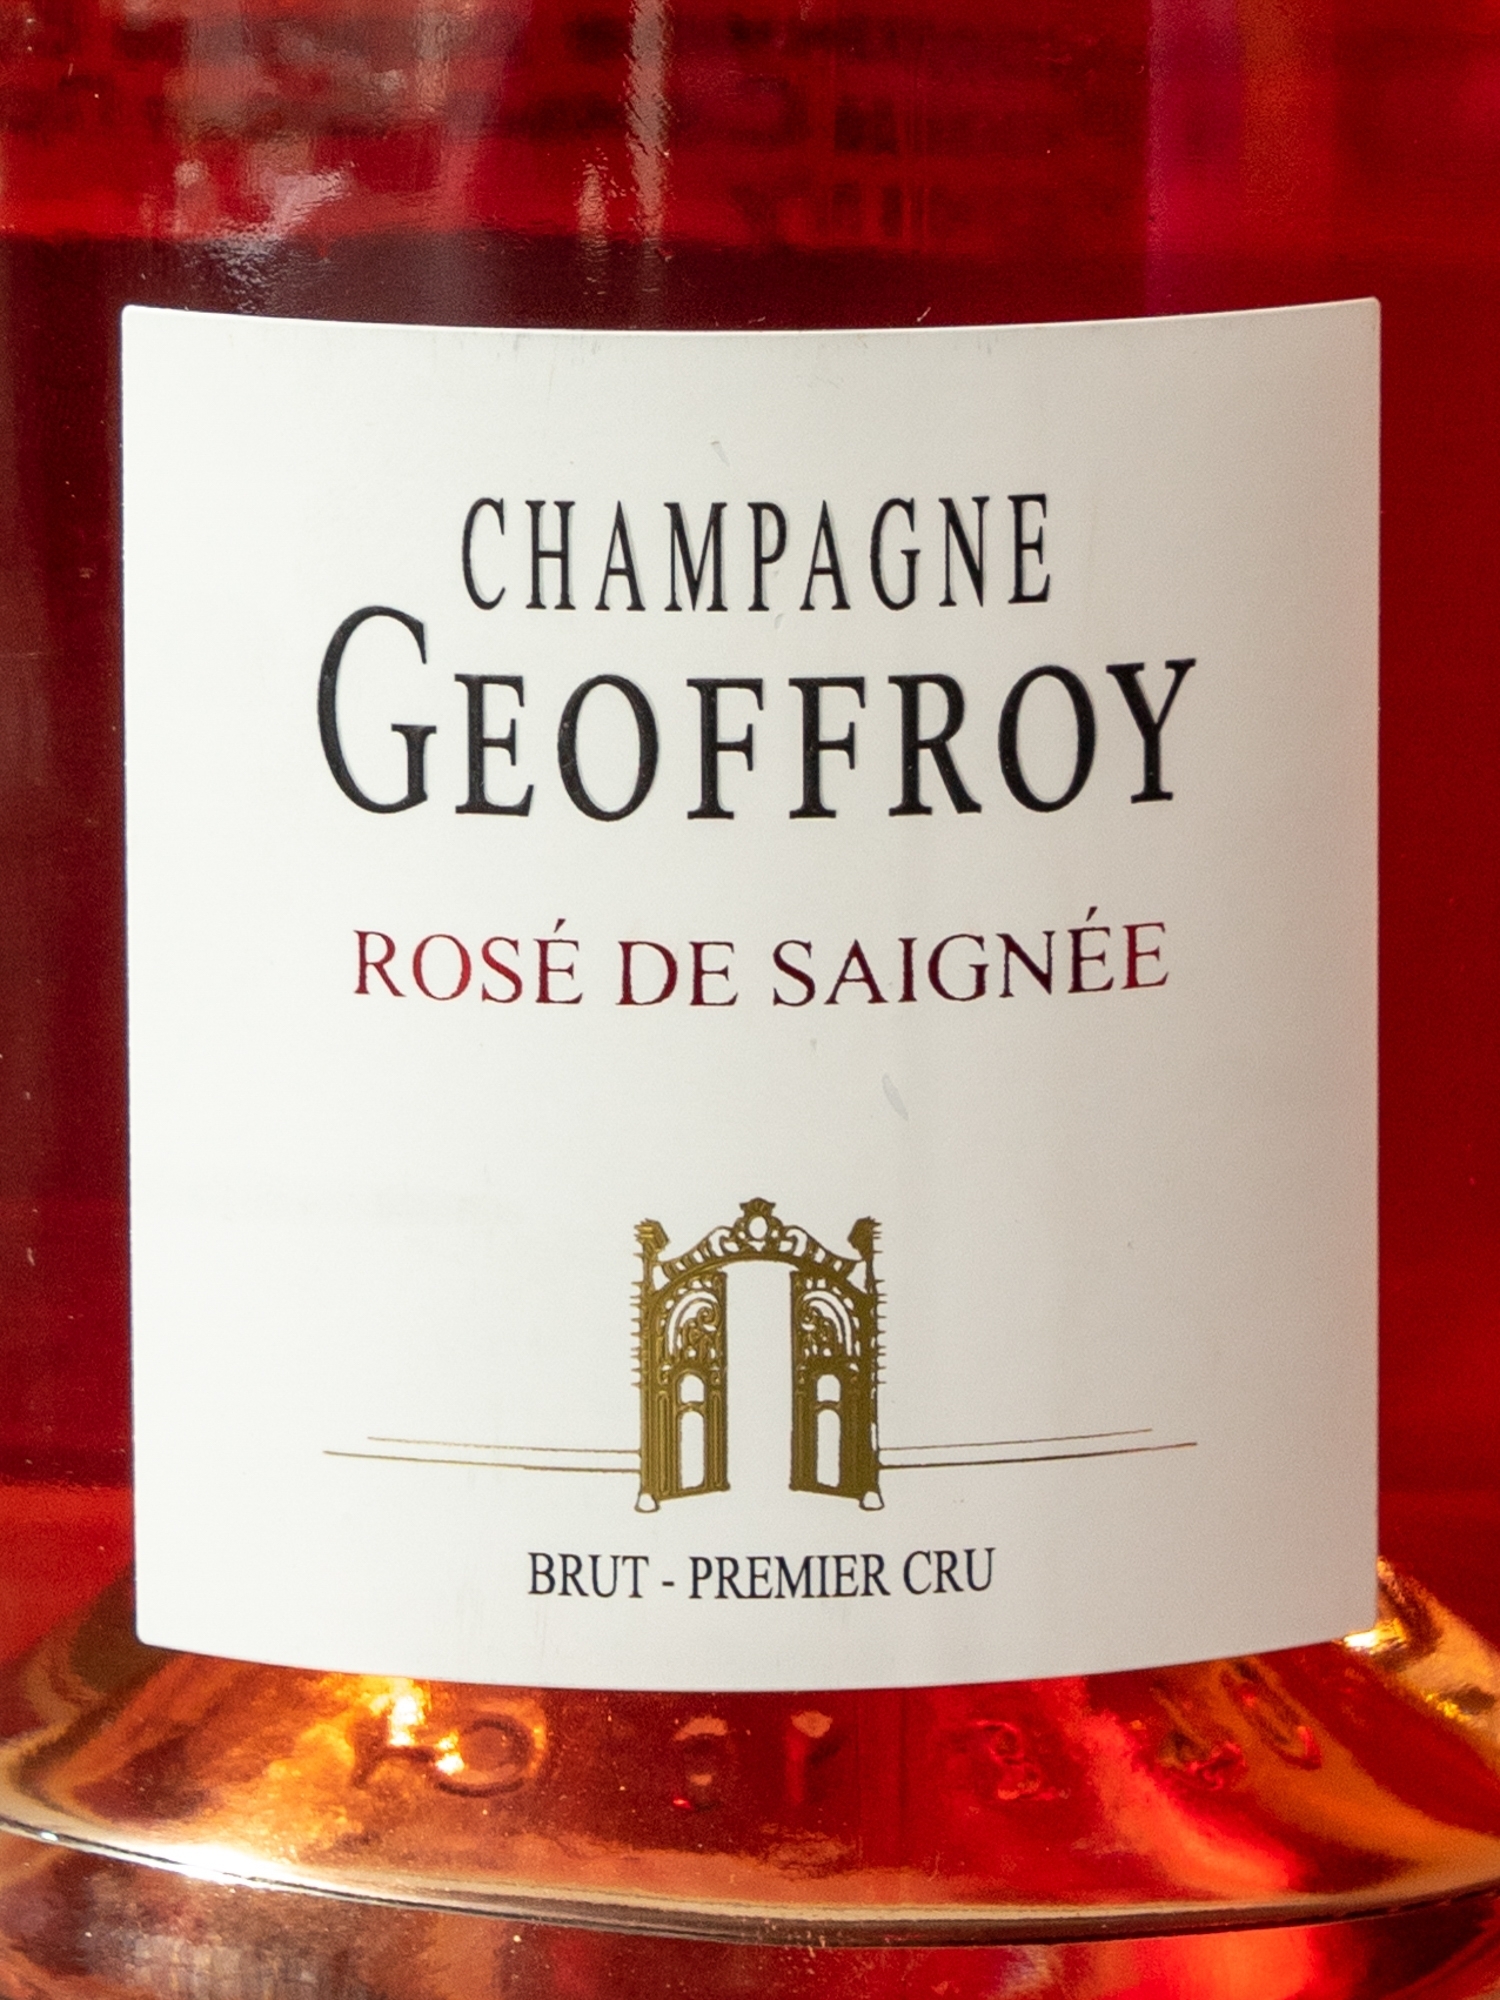 Этикетка Champagne Geoffroy Rose de Saignee Brut Premier Cru